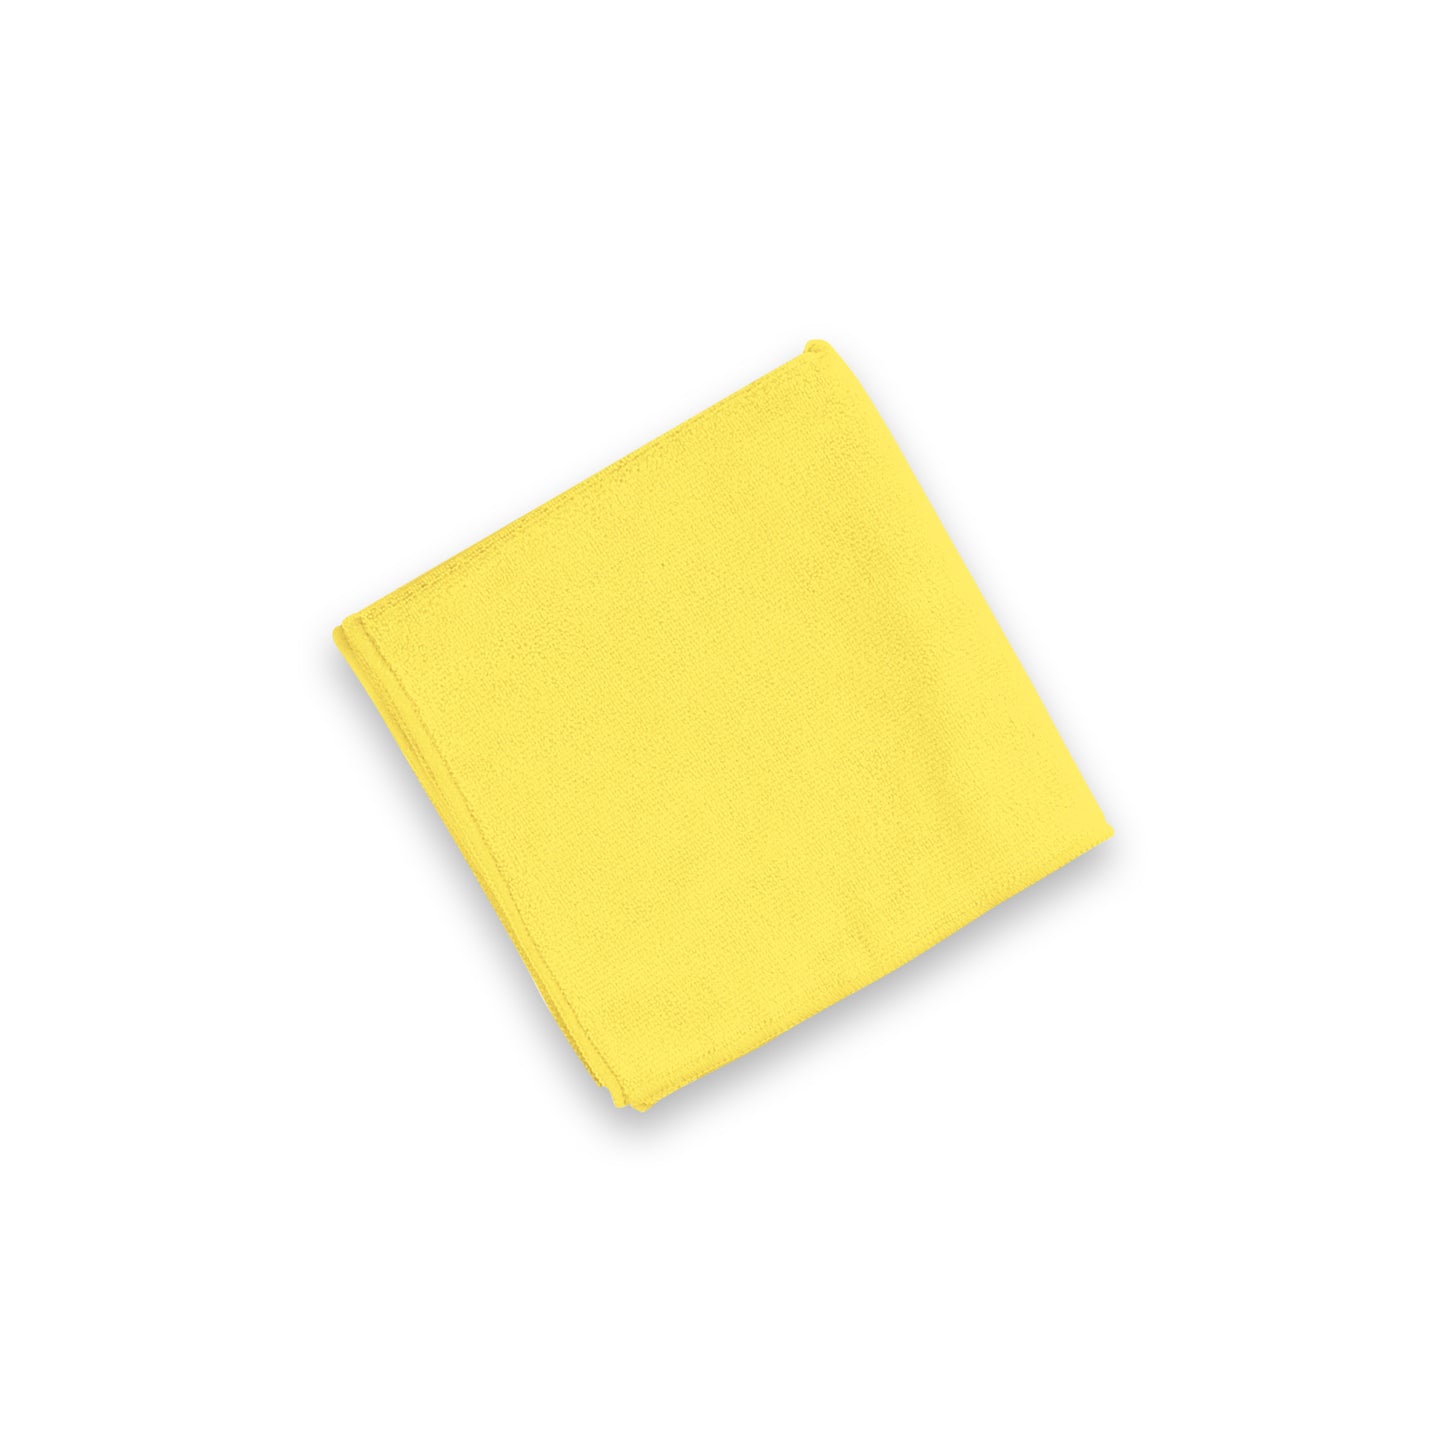 ImportWorx Professional Yellow MicroFiber Towels 16" x 16" (4 Pack)